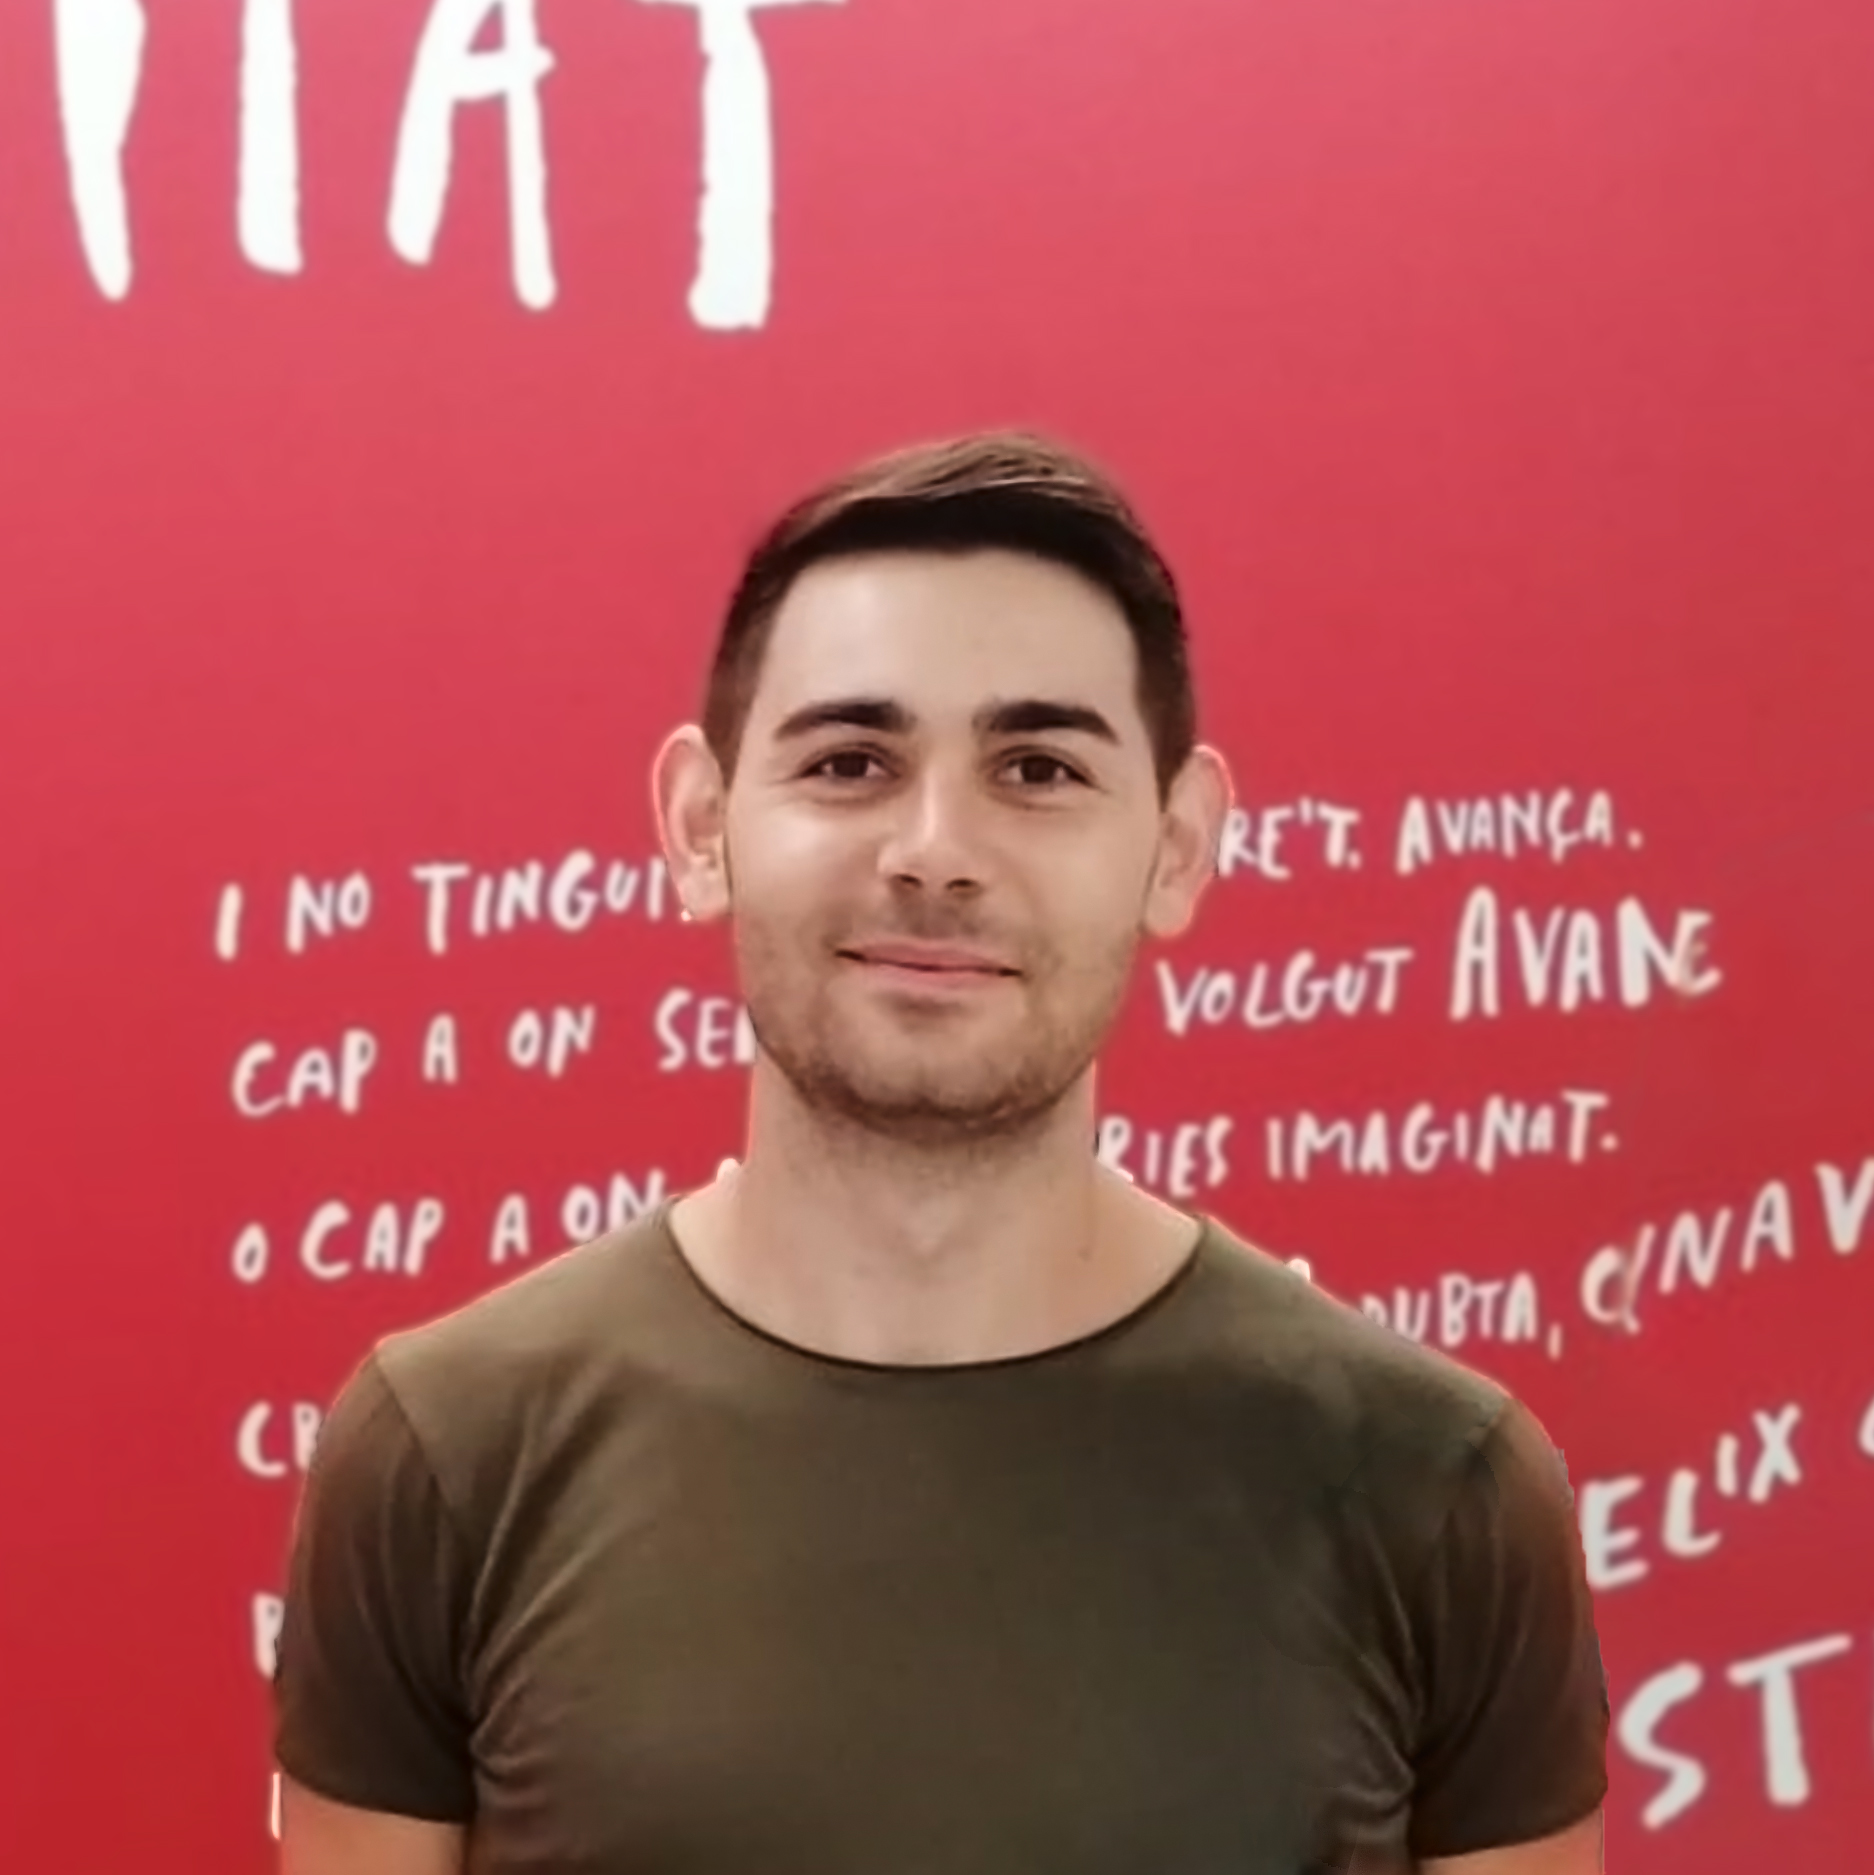 Zheko Dimitrov, internship student from Varna, Bulgaria